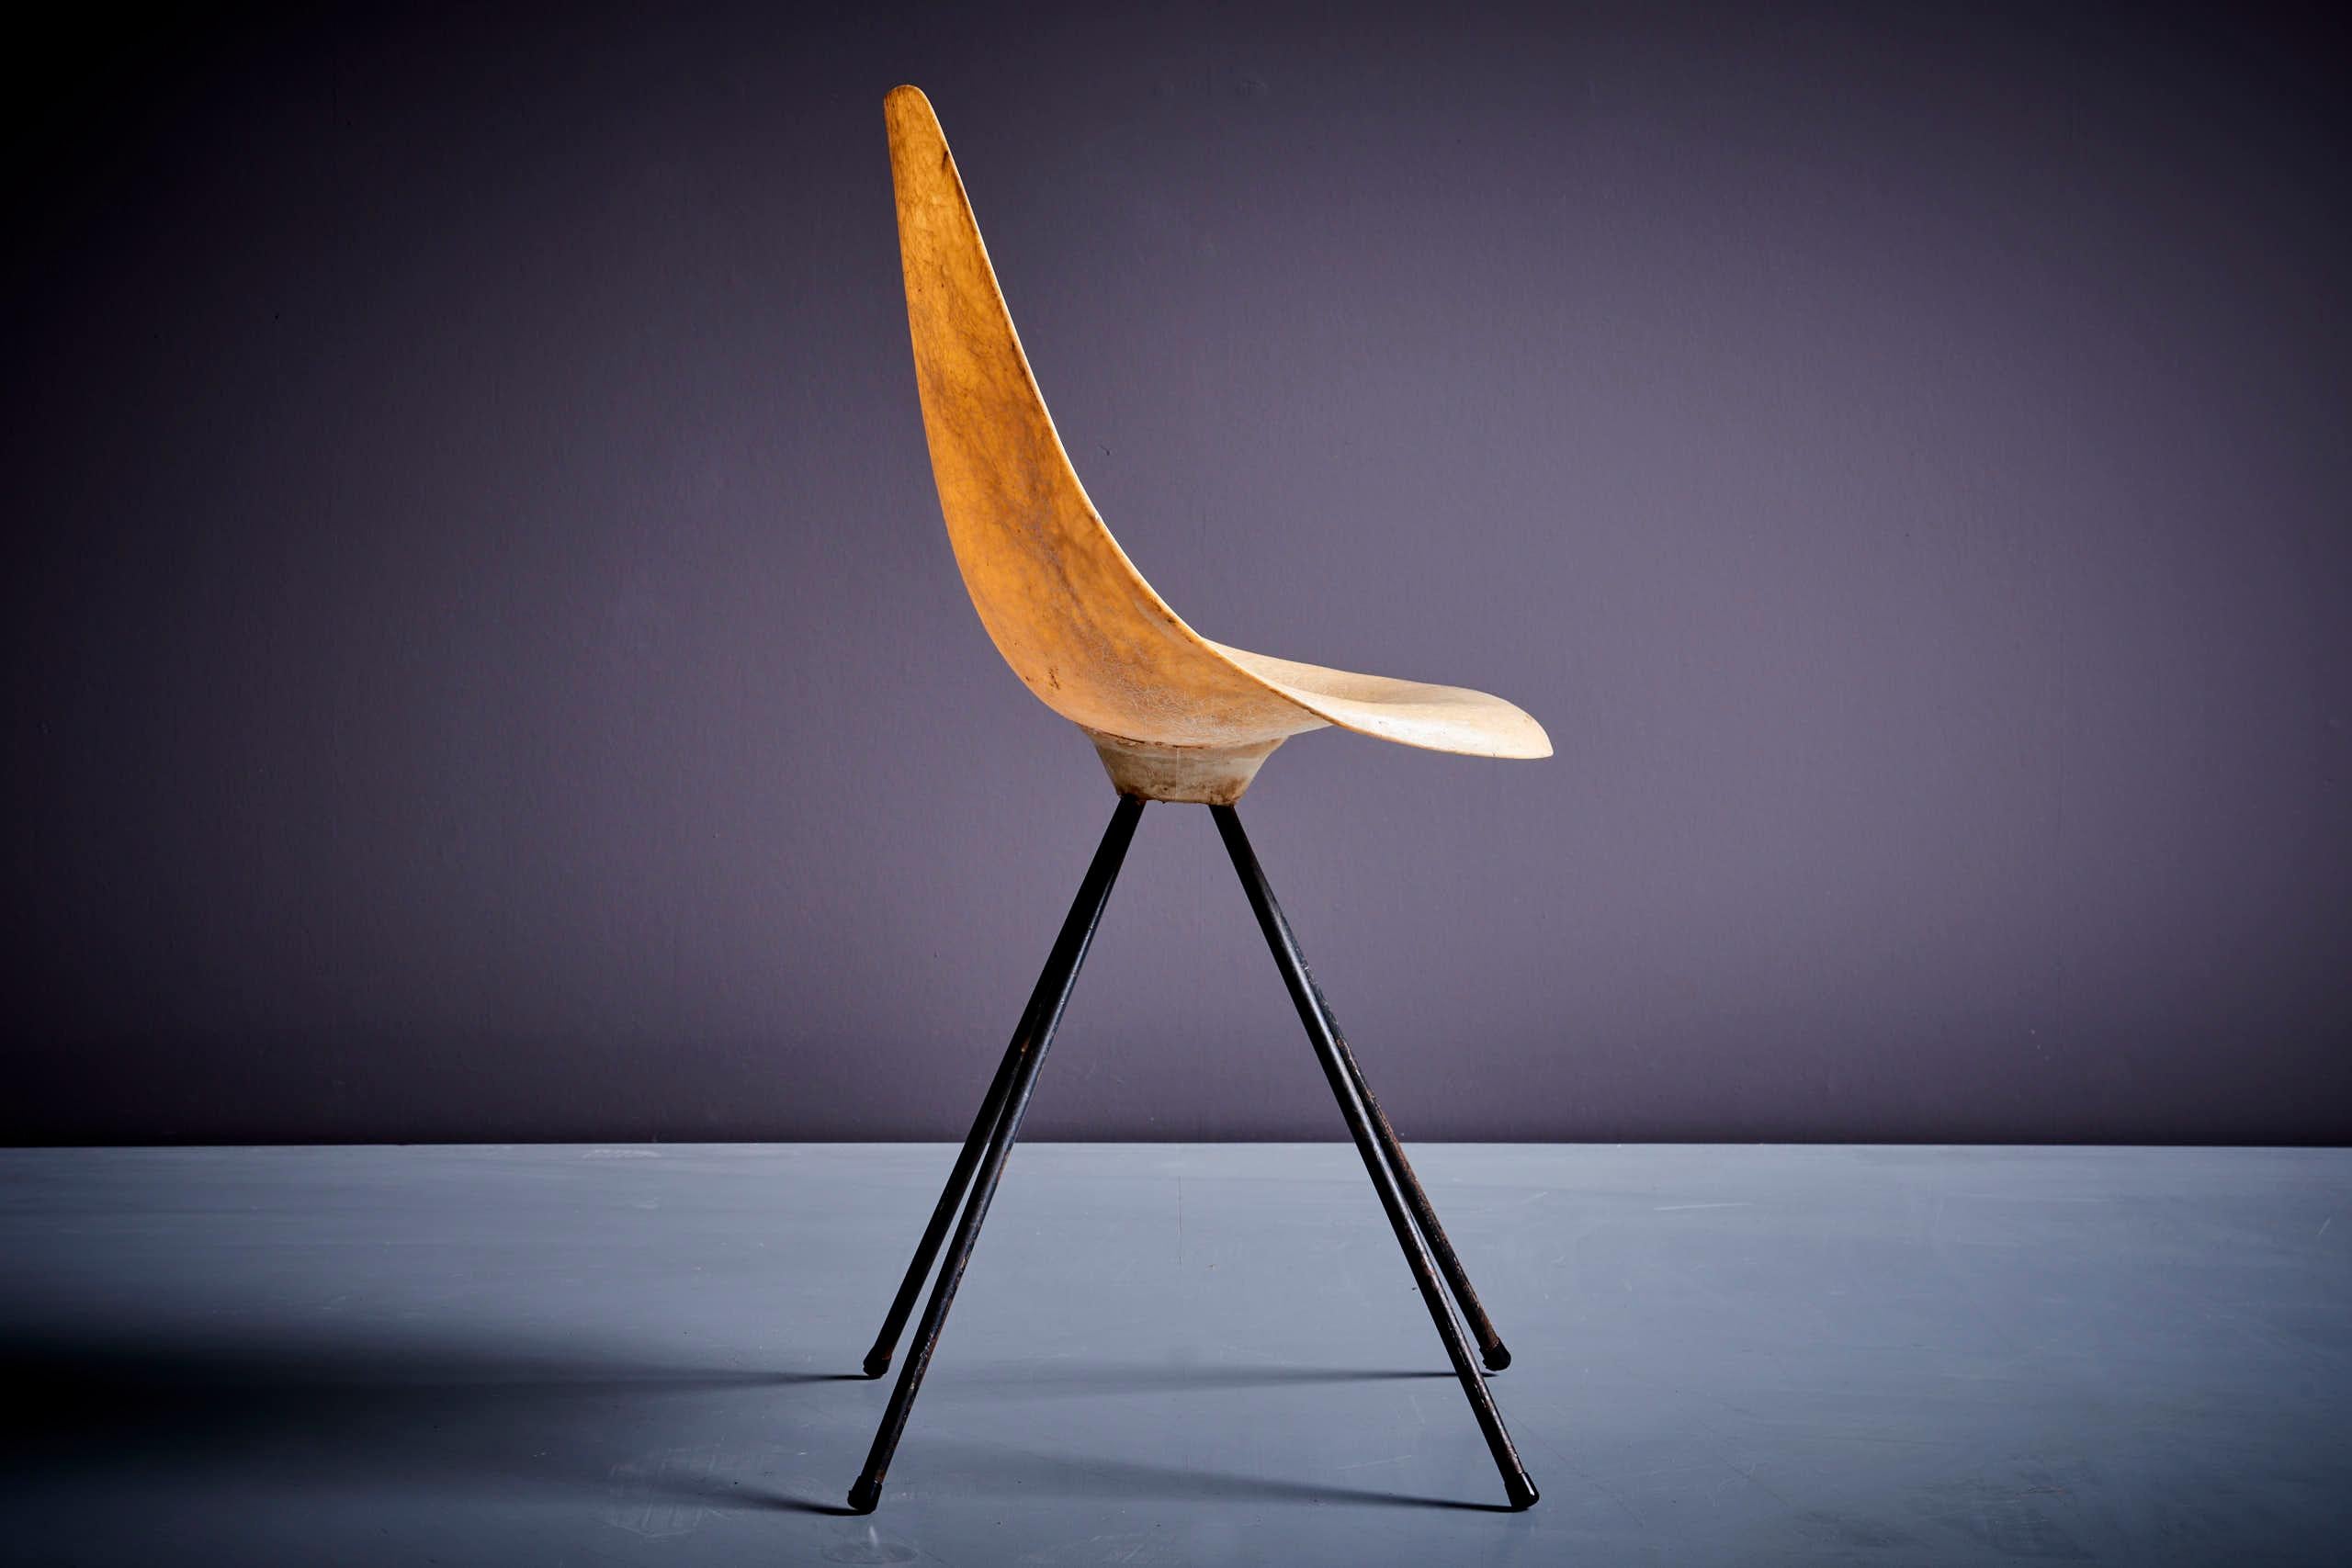 Mid-20th Century Jean-René Picard for S.E.T.A Fiberglass Chair France - 1950s For Sale